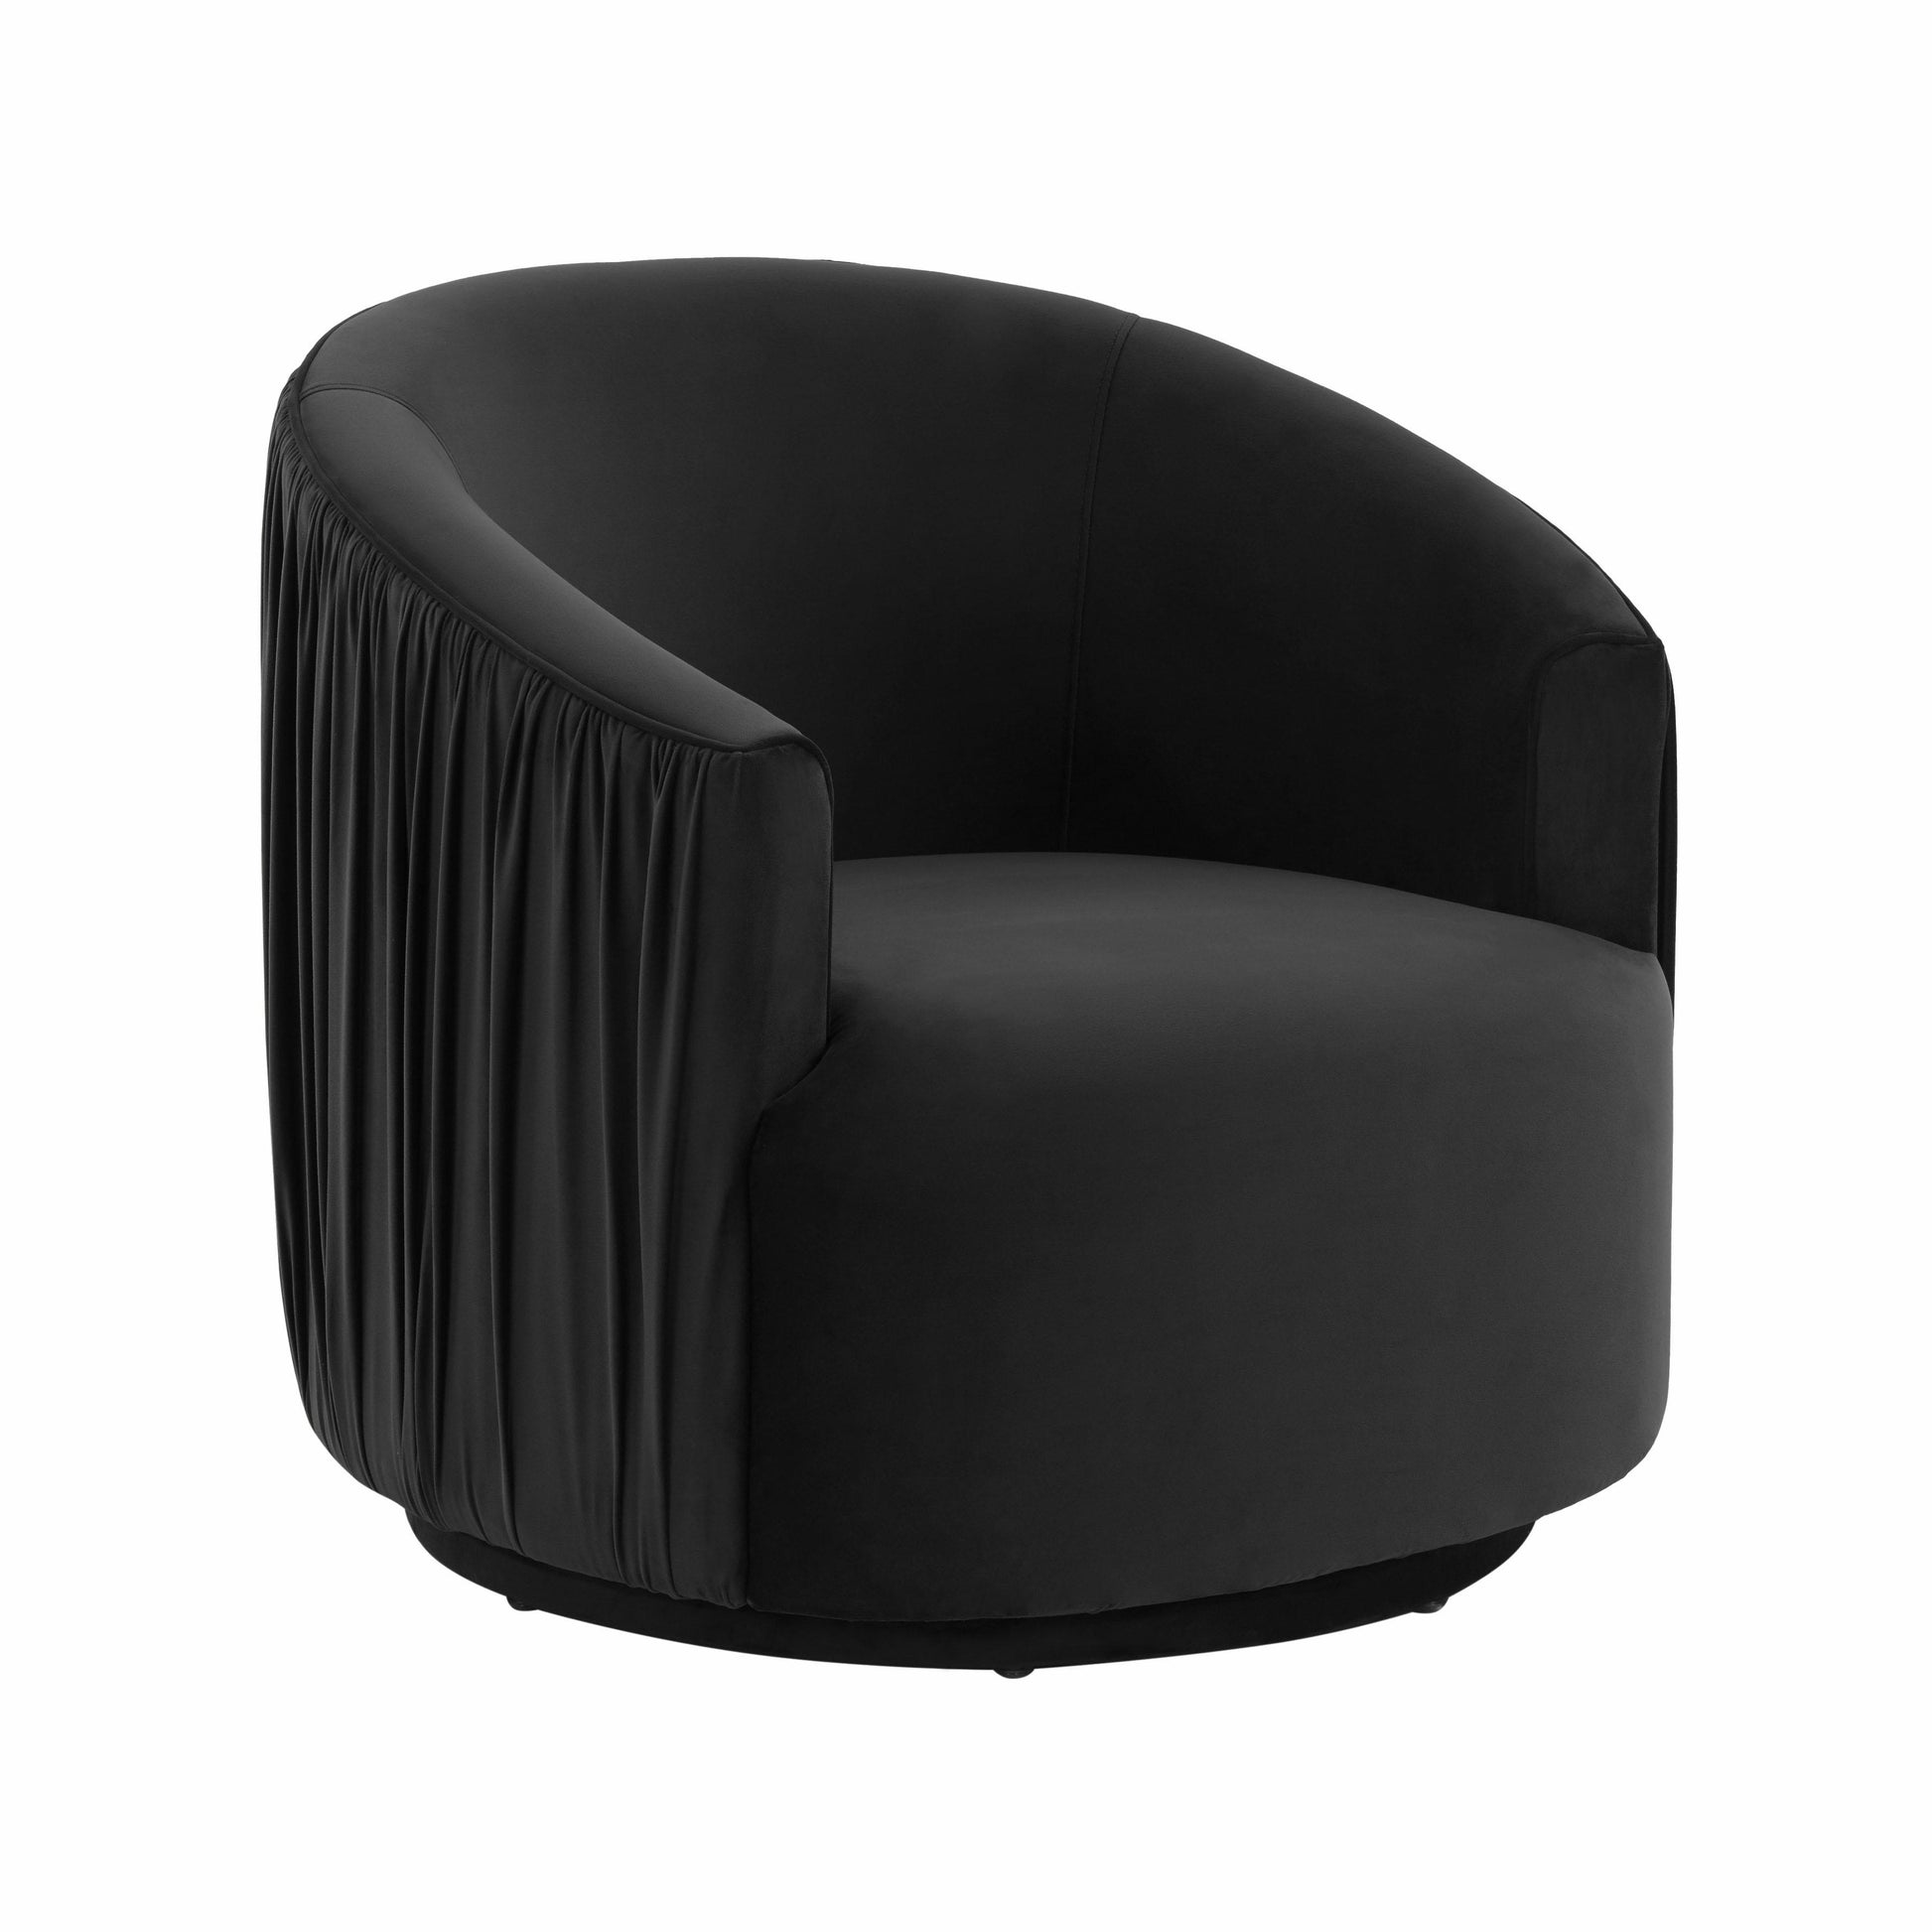 Tov Furniture London Black Pleated Swivel Chair